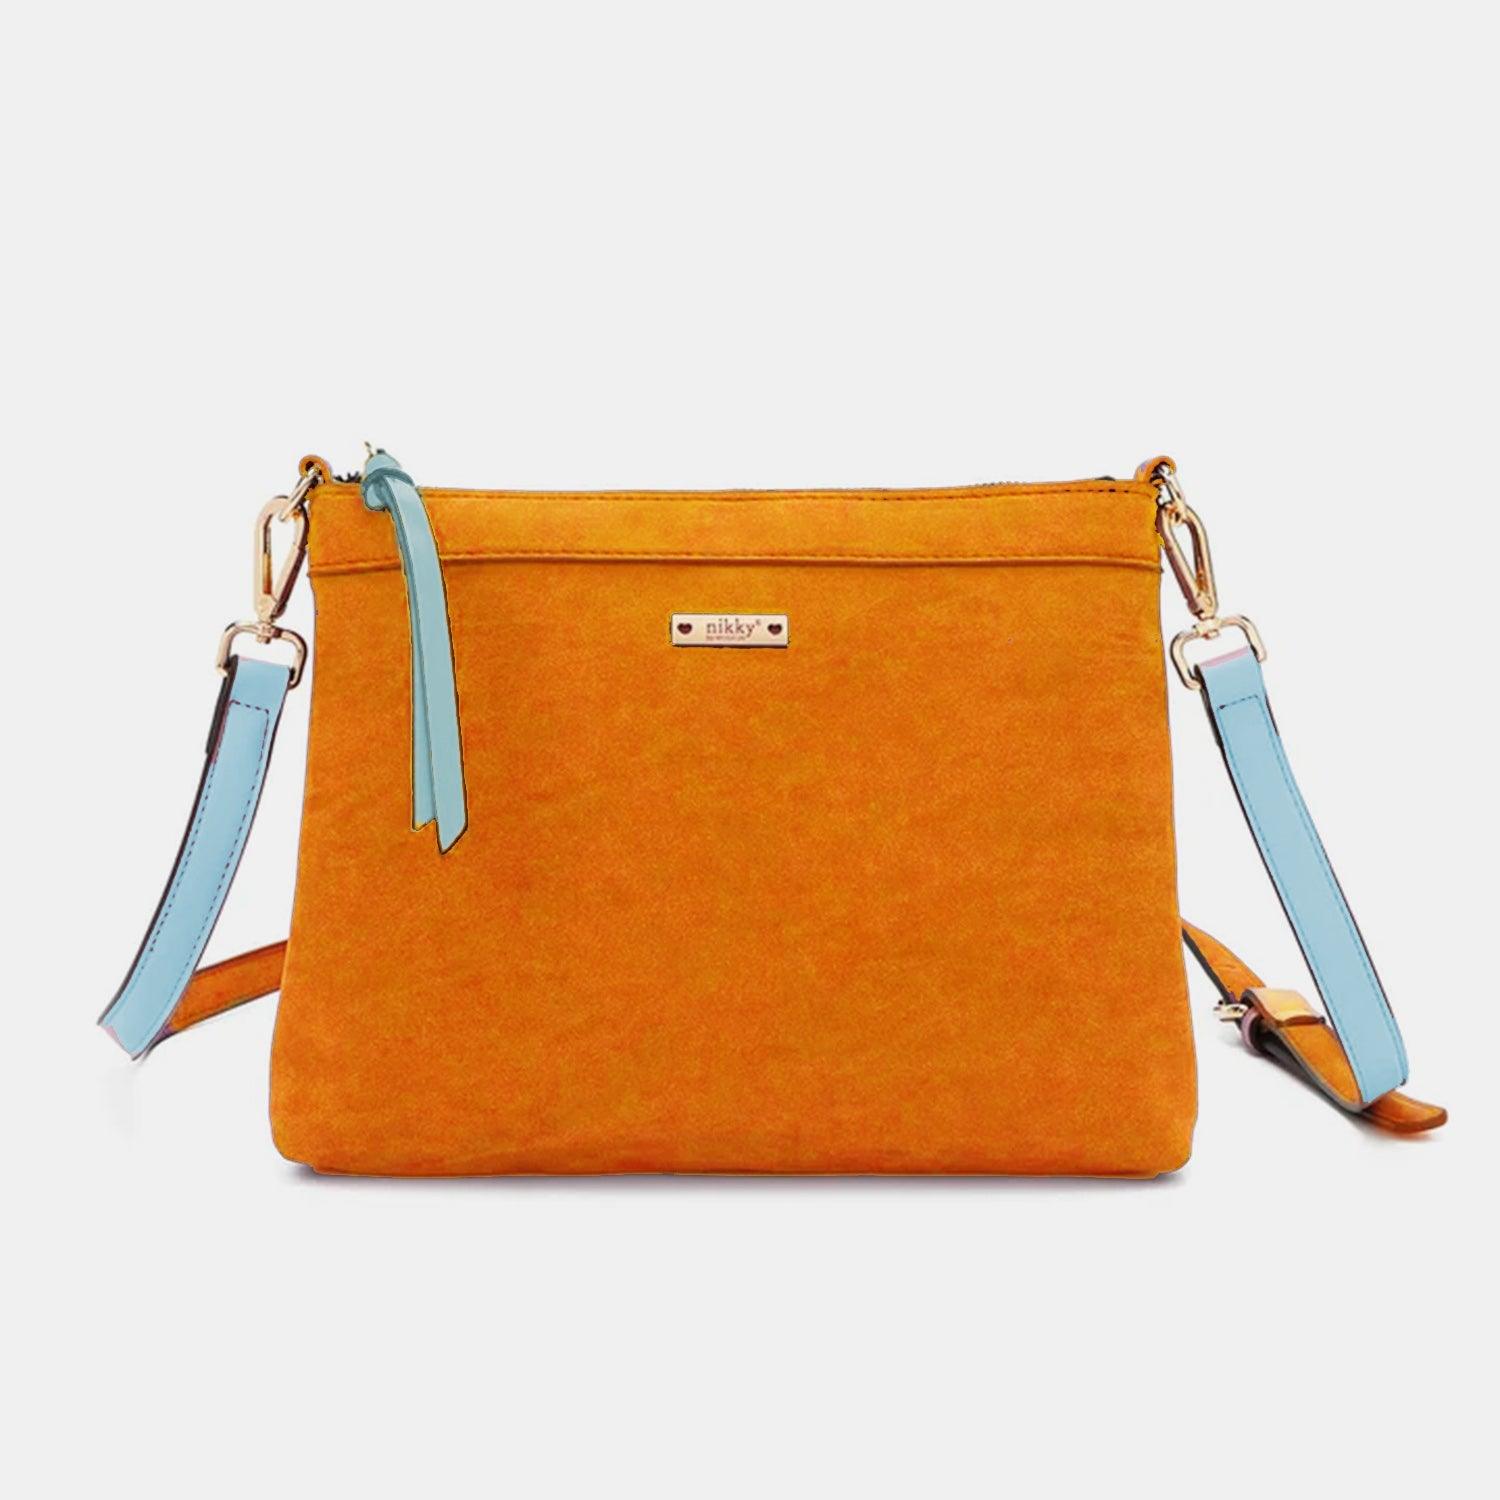 a small orange purse with a blue strap